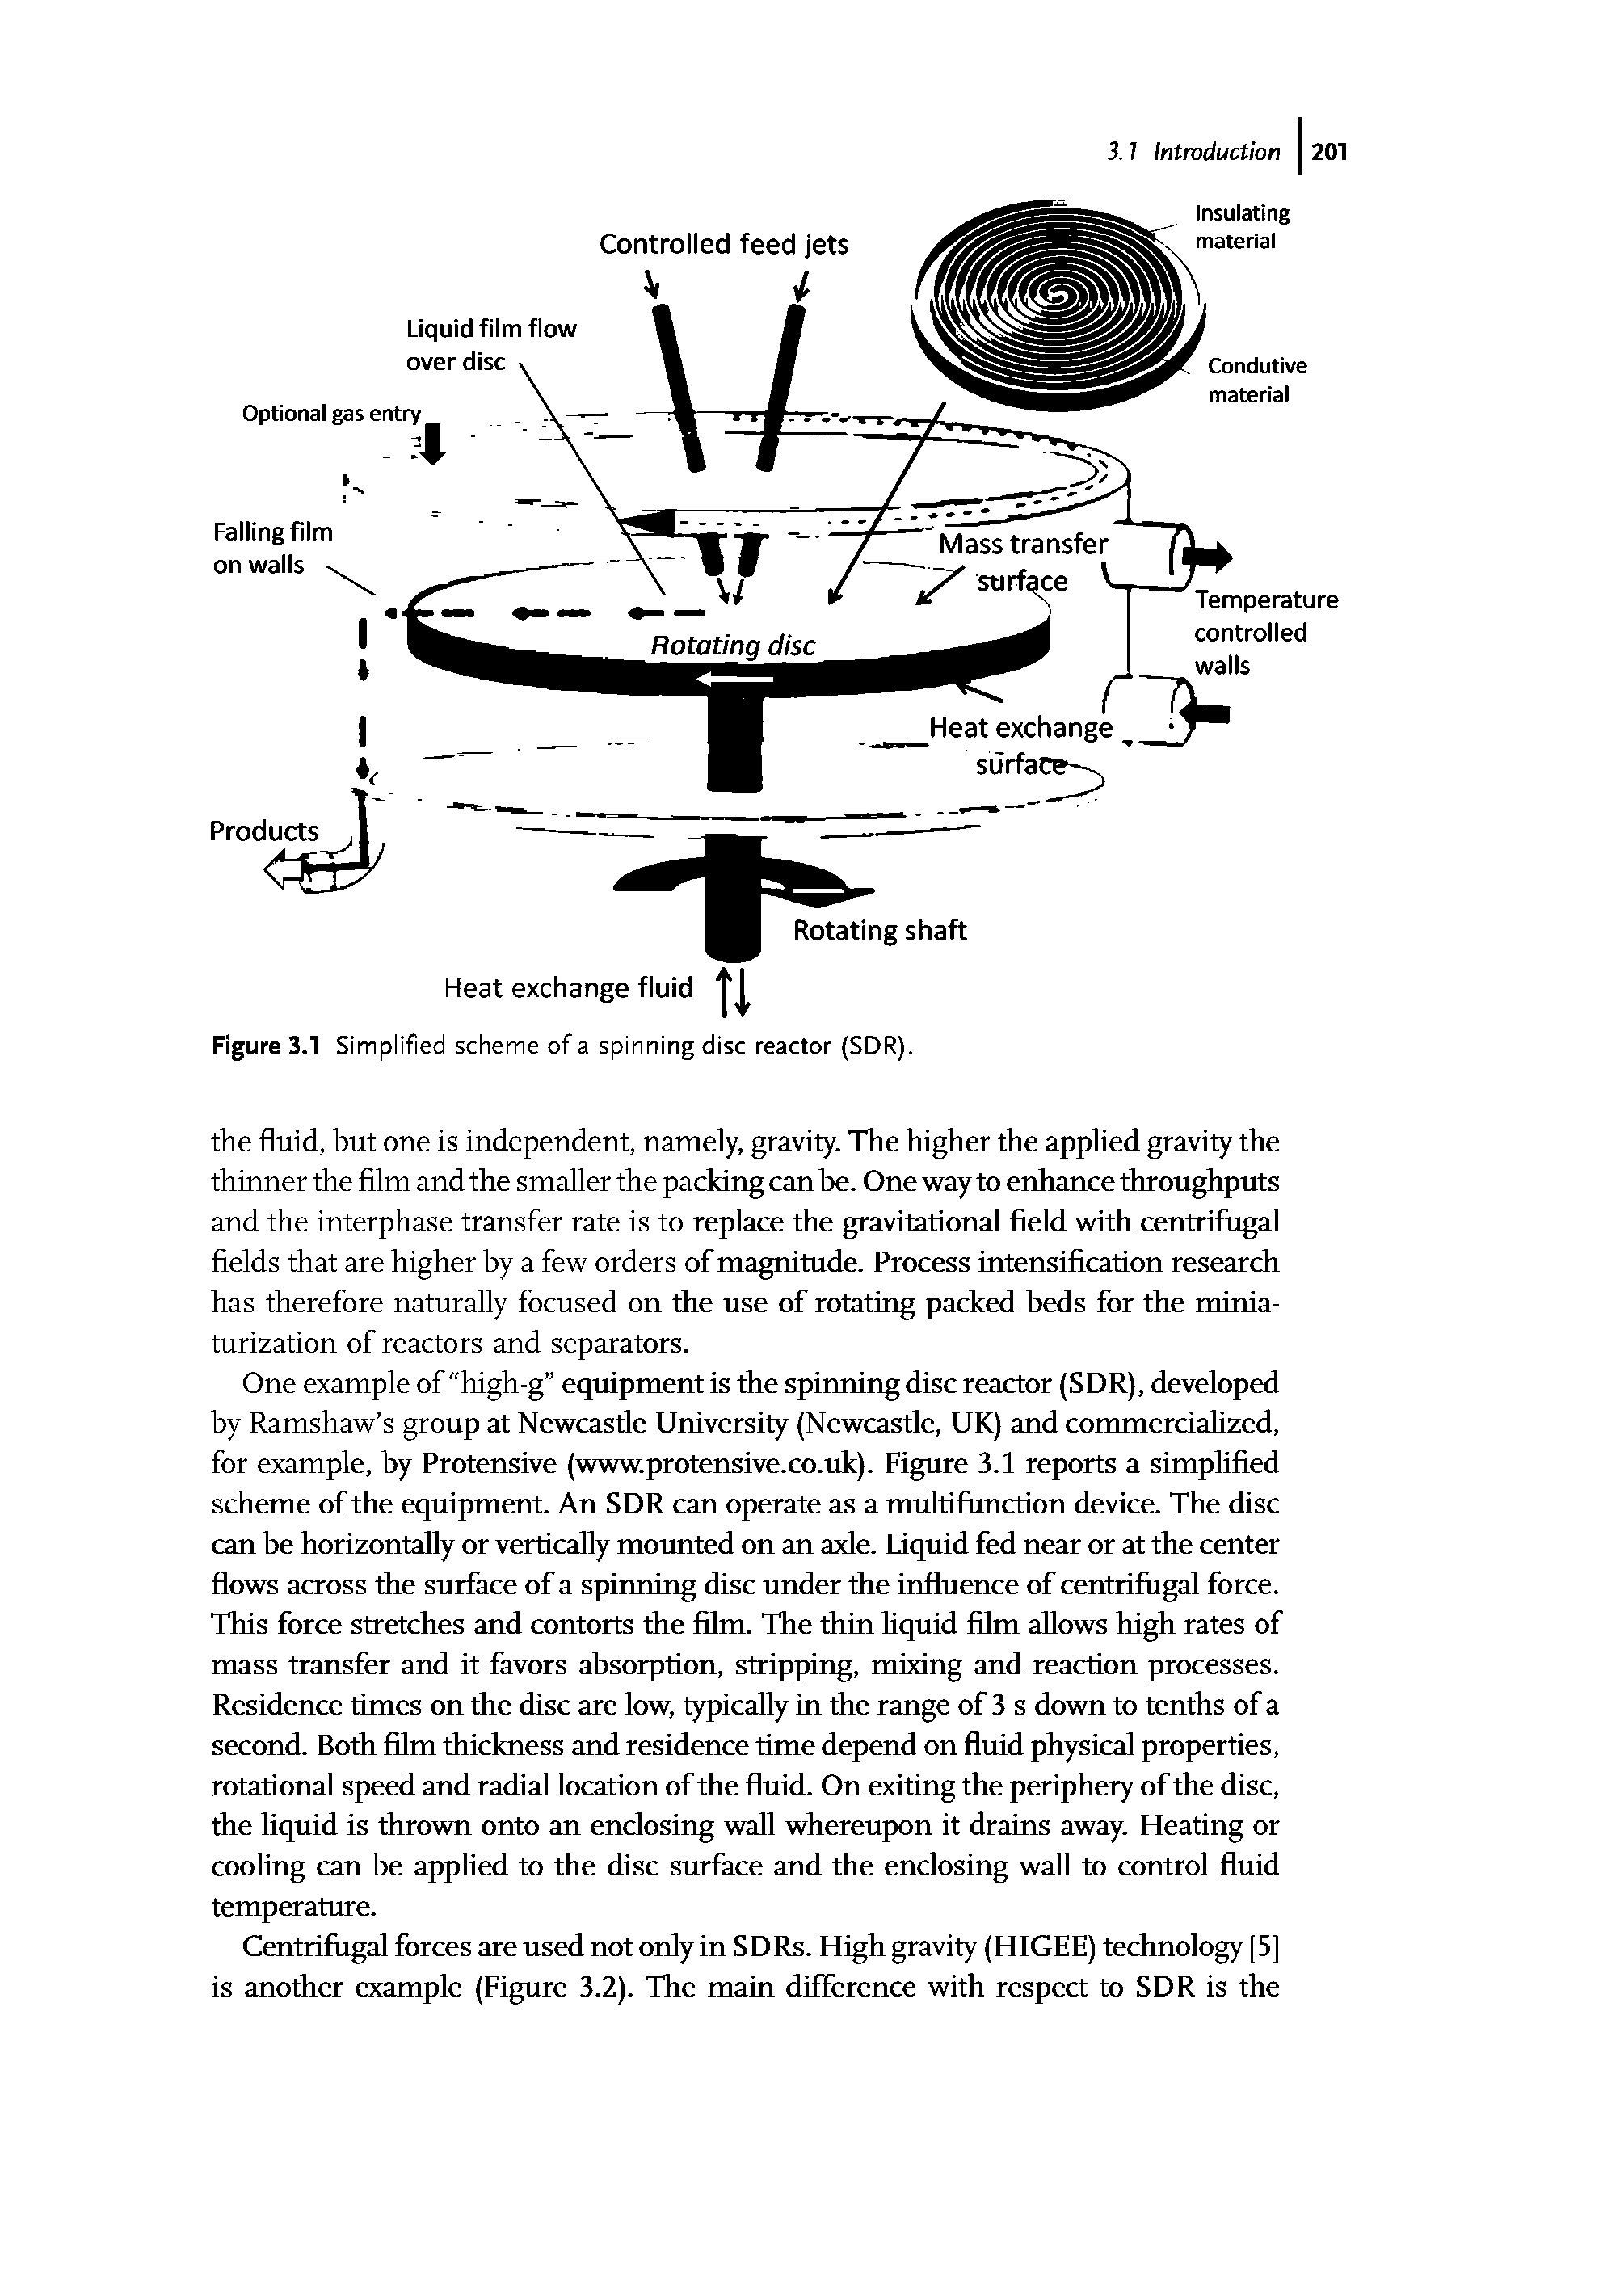 Figure 3.1 Simplified scheme of a spinning disc reactor (SDR).